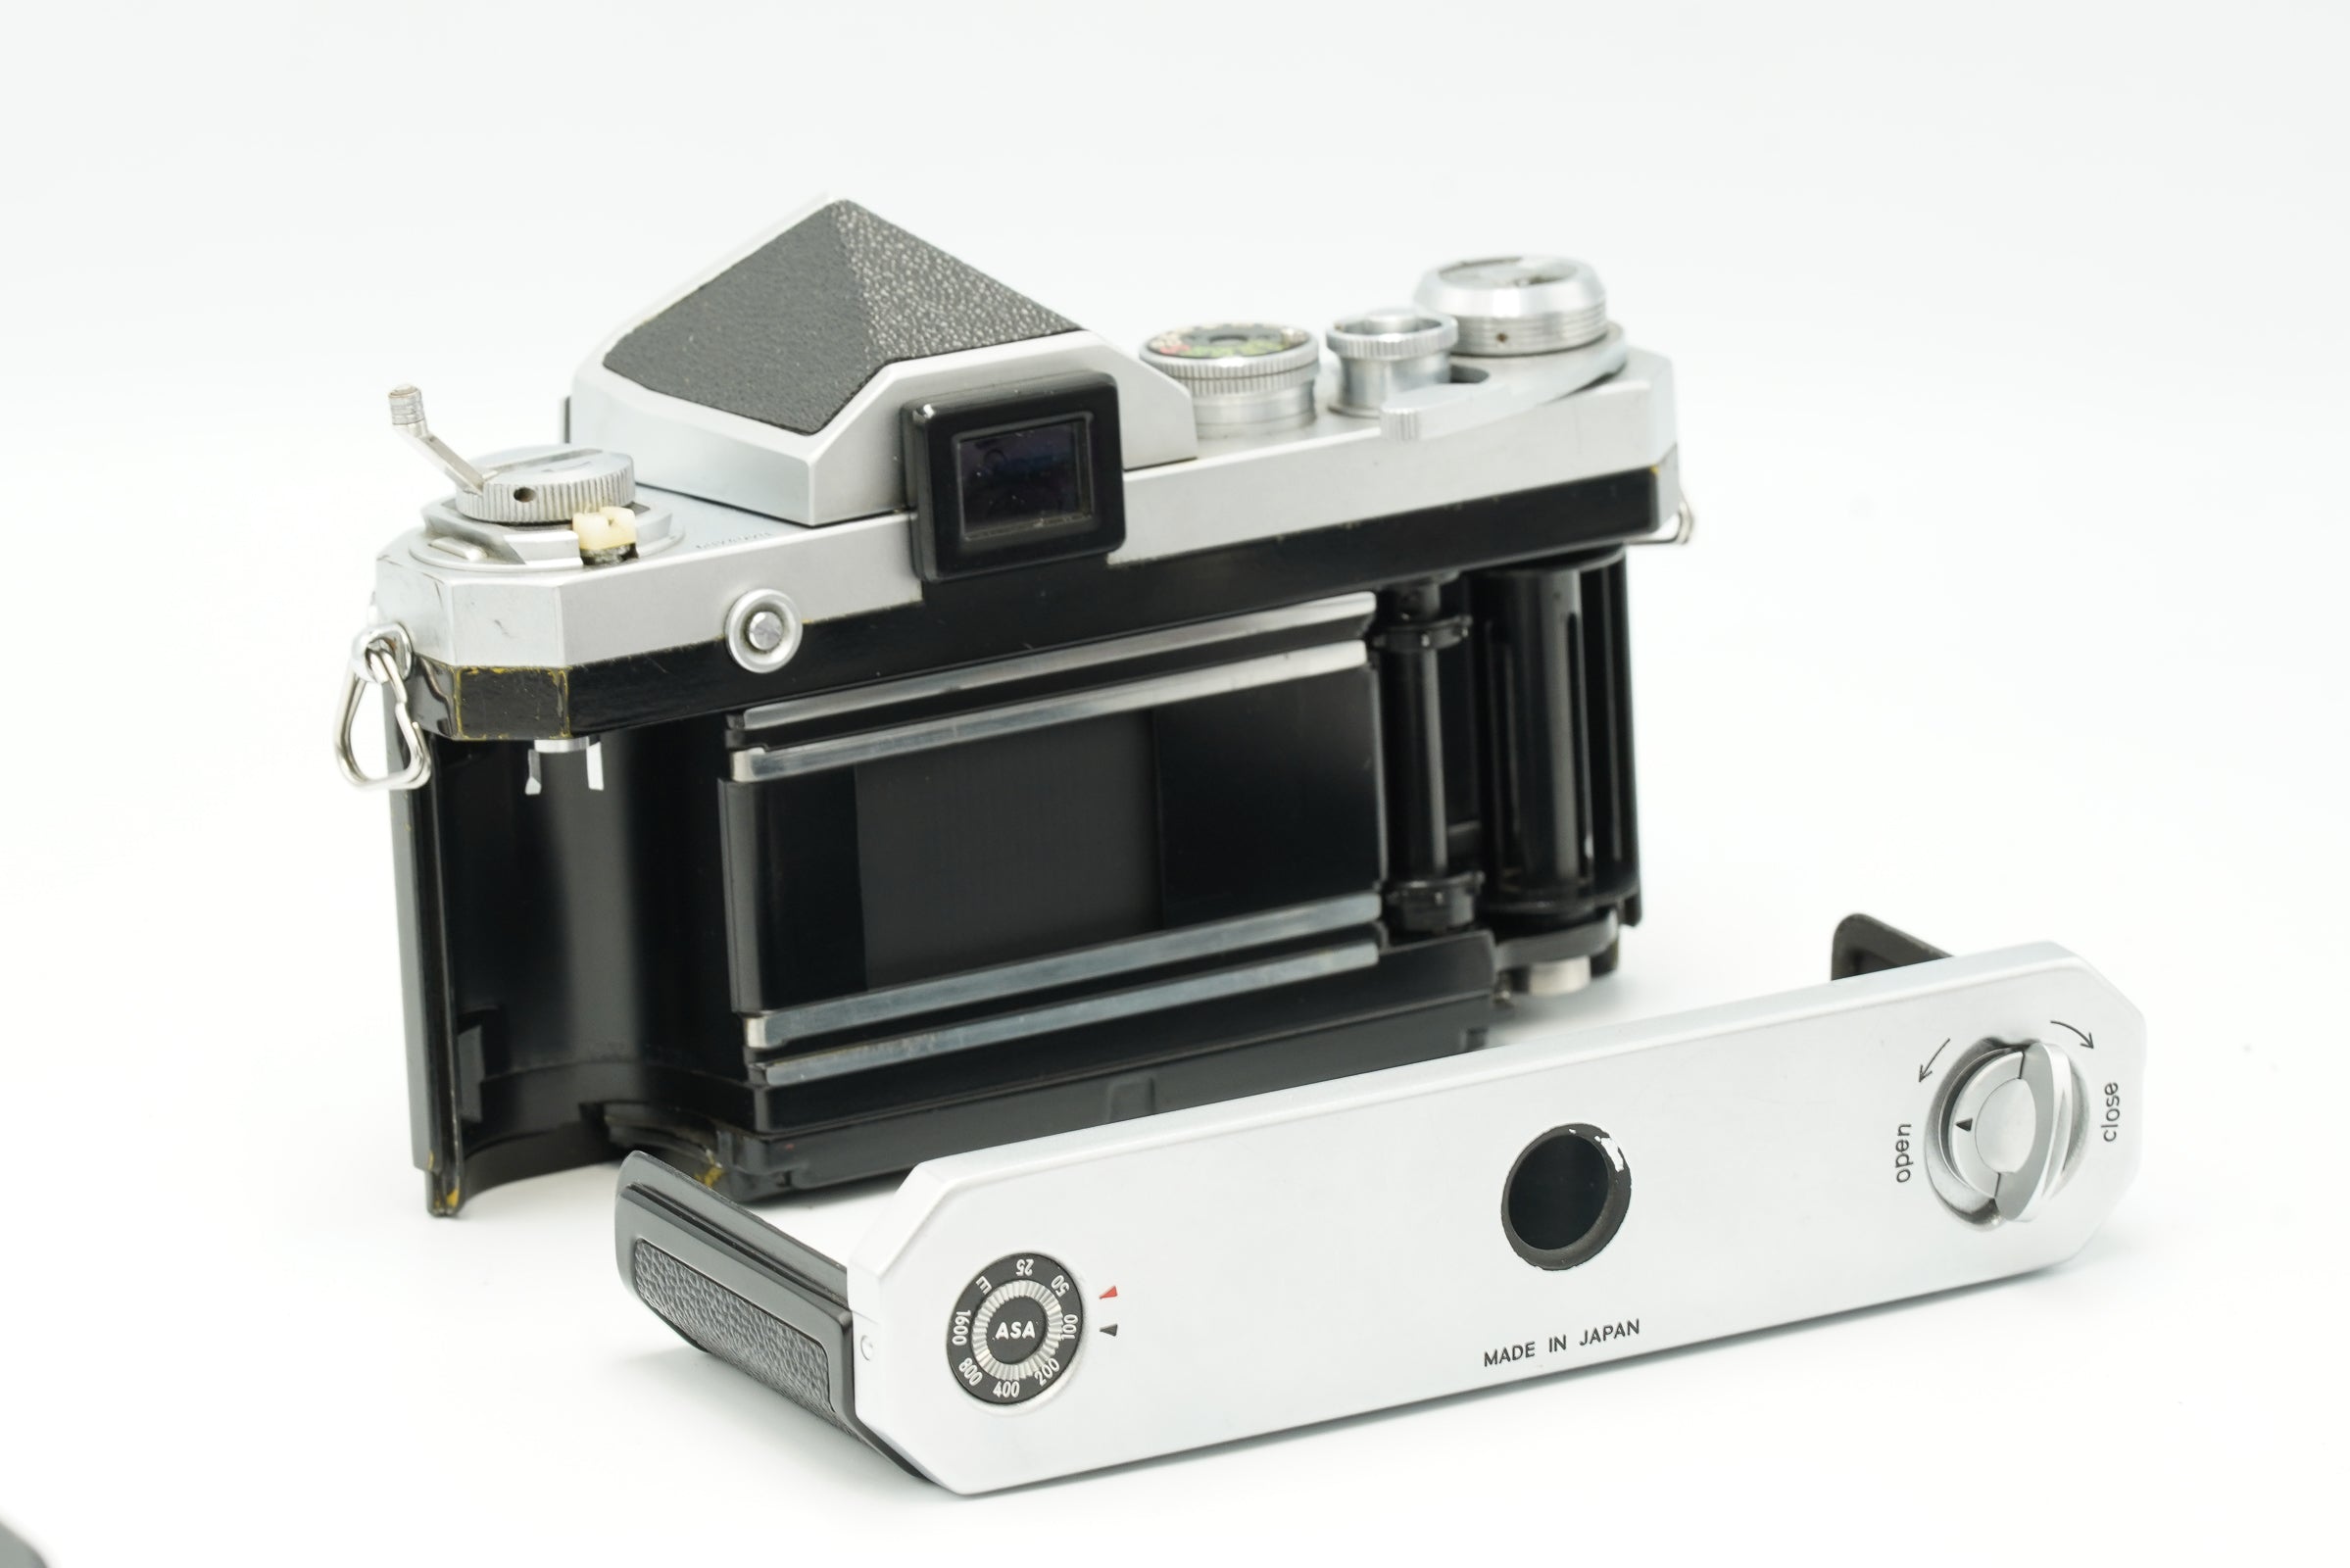 The original Nikon F body, with various lens options